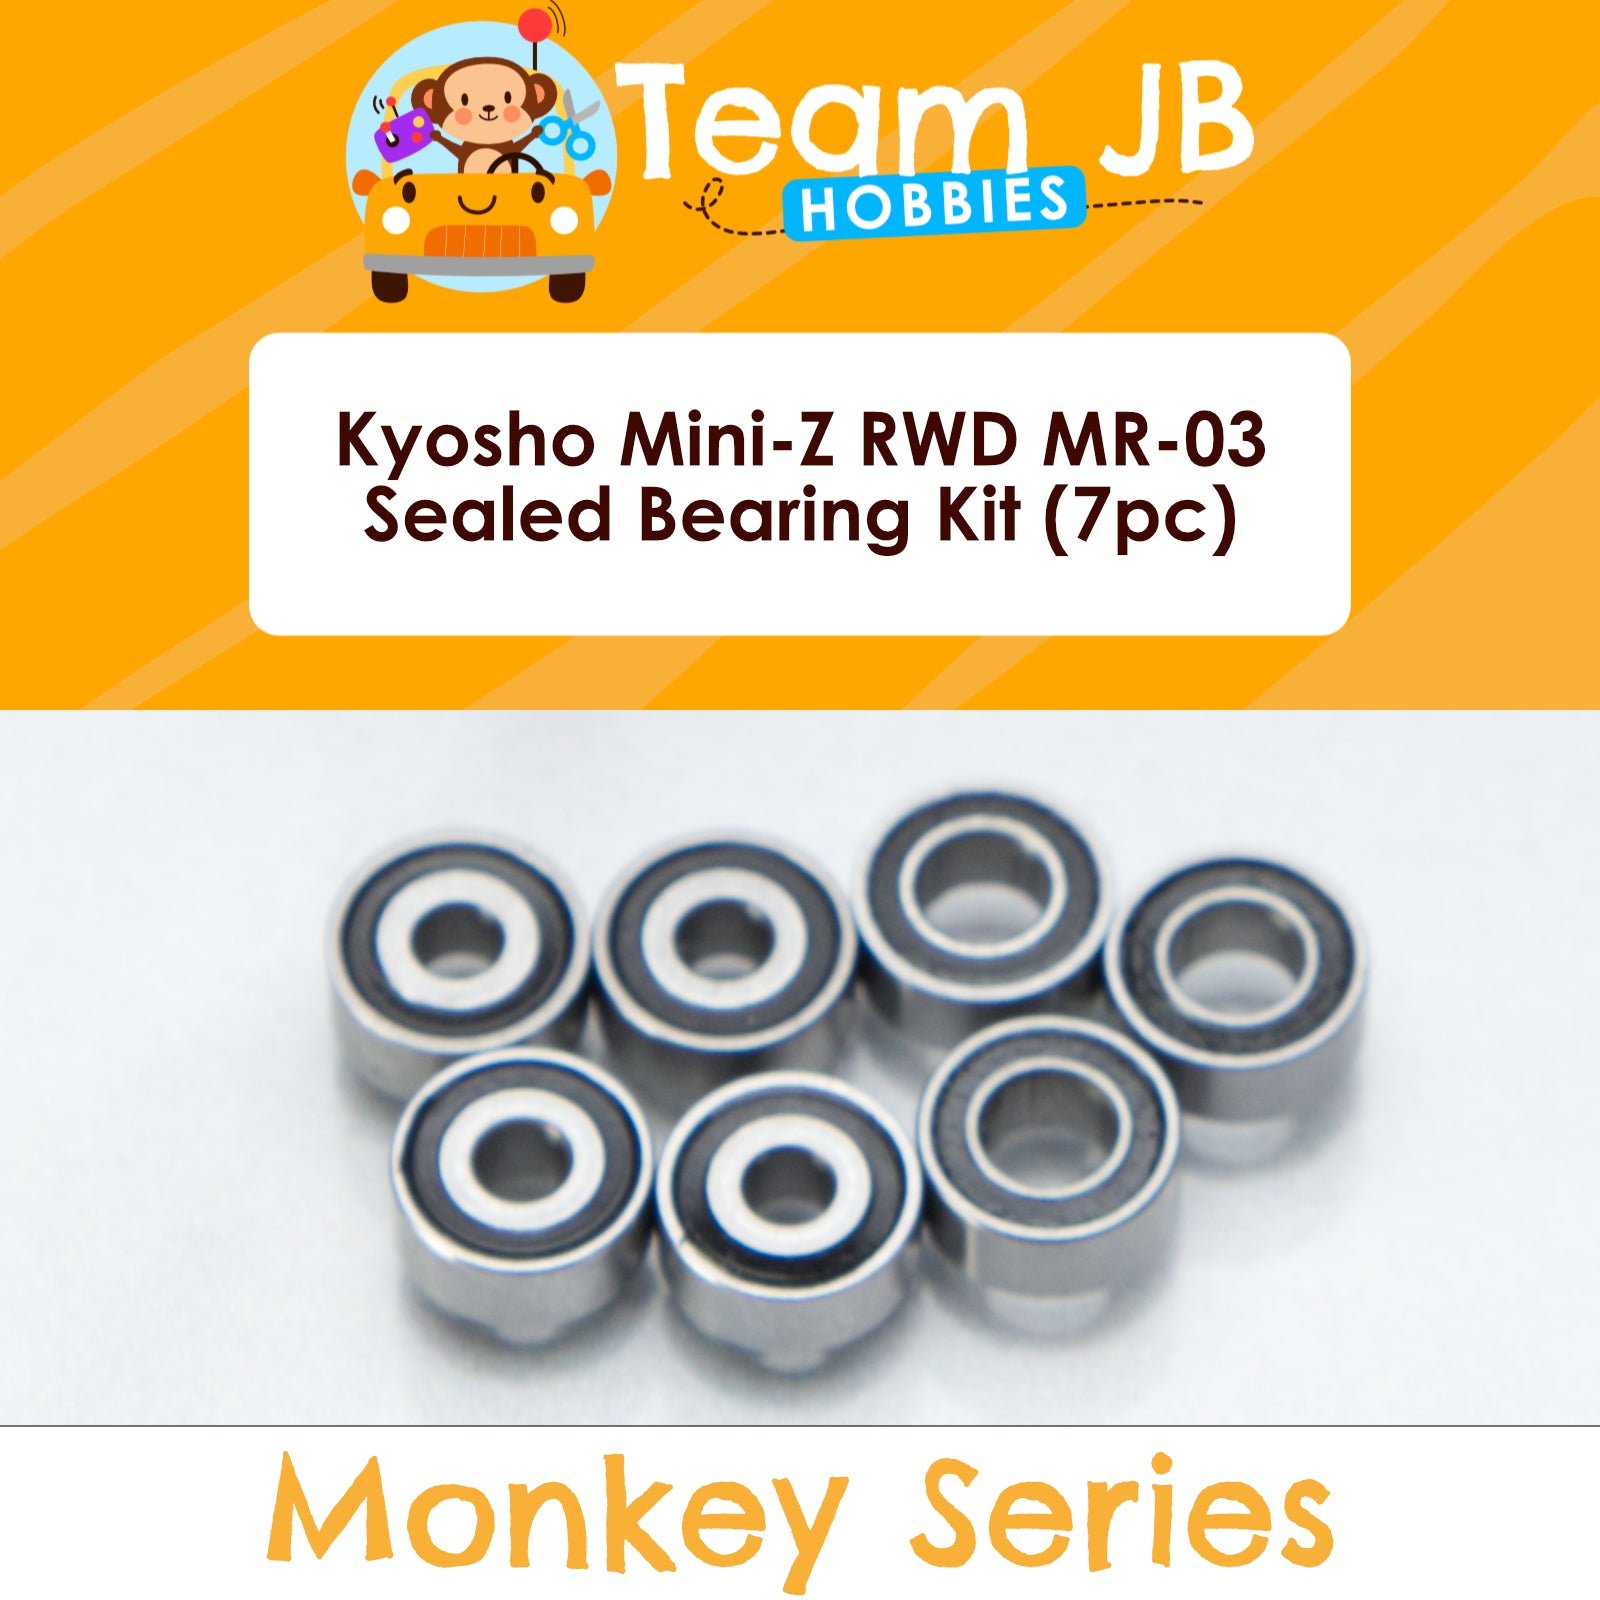 Kyosho Mini-Z RWD MR-03 - Sealed Bearing Kit